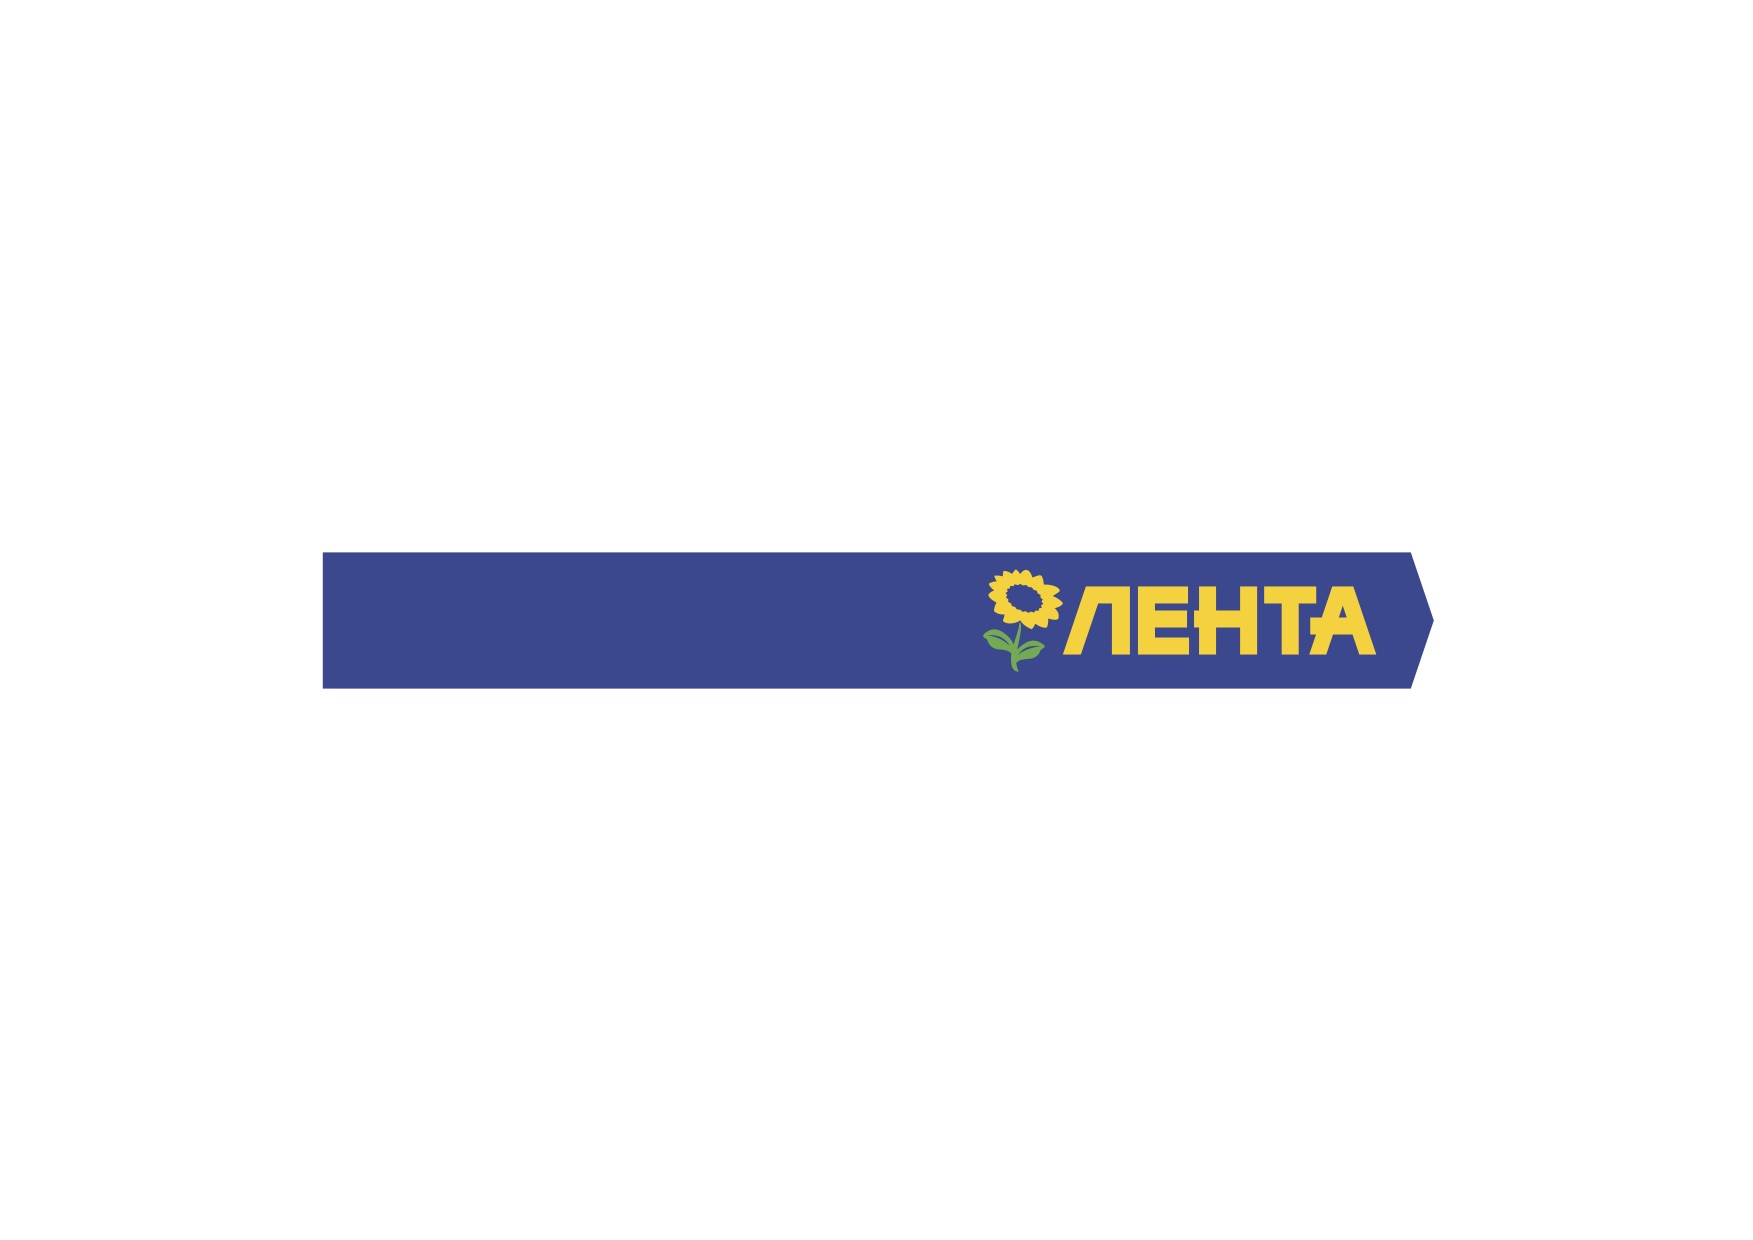 Lenta Logo .jpg